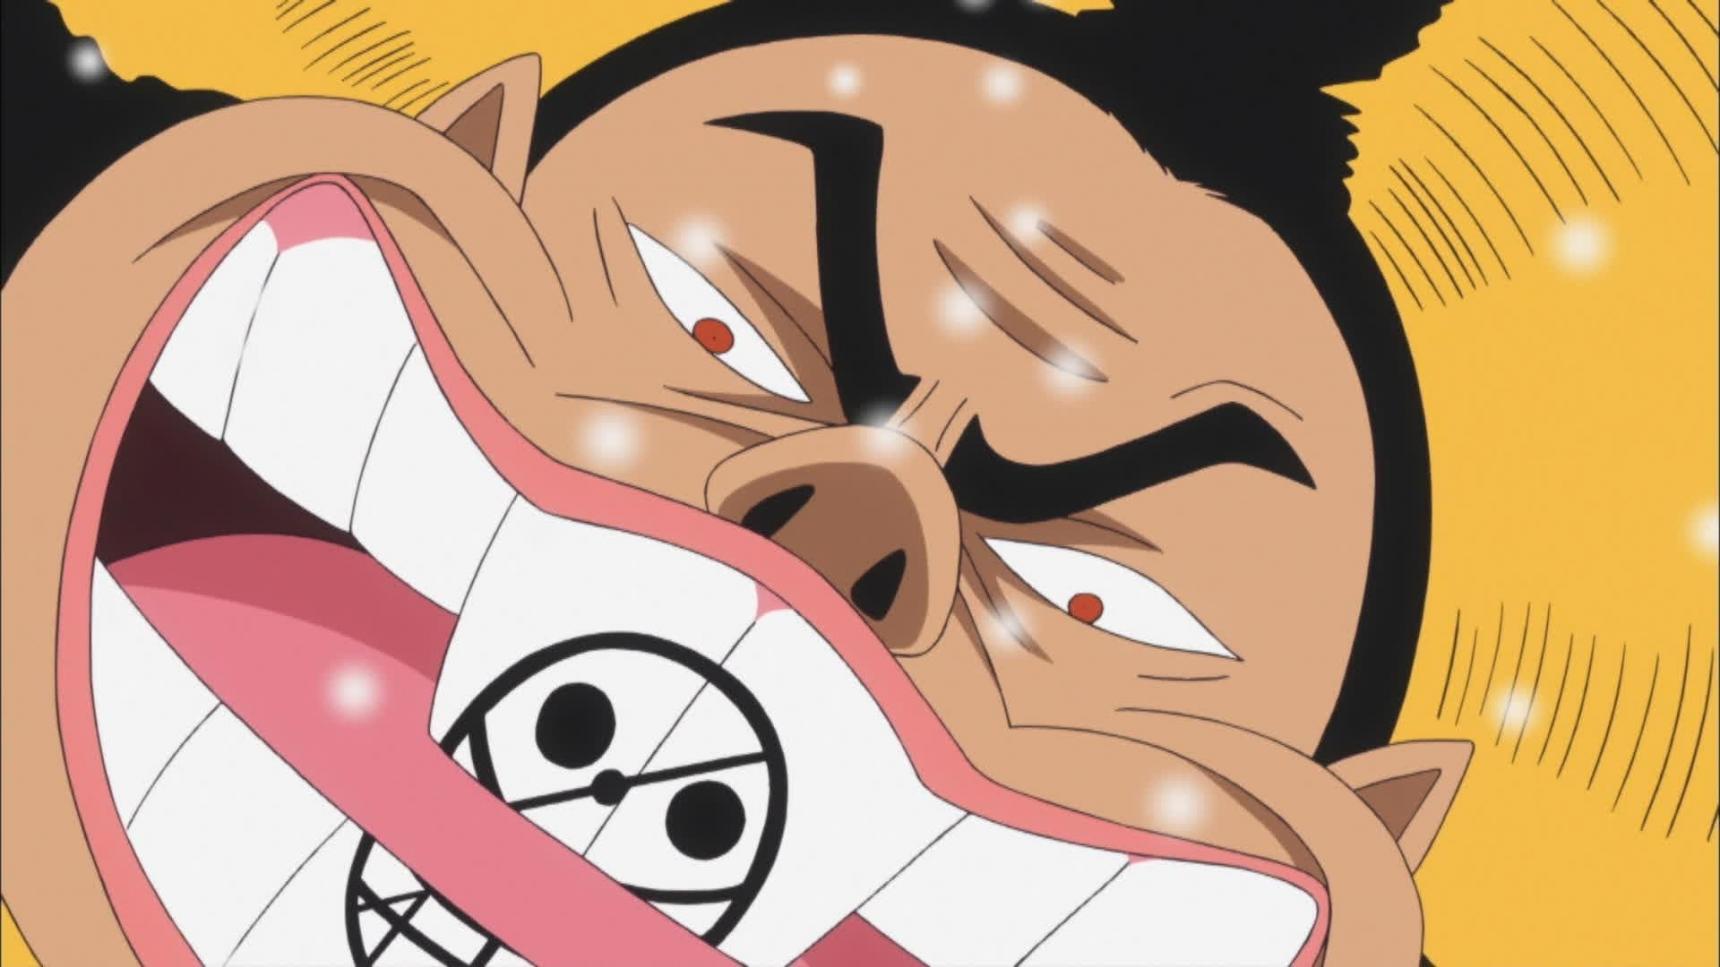 Poster del episodio 621 de One Piece online